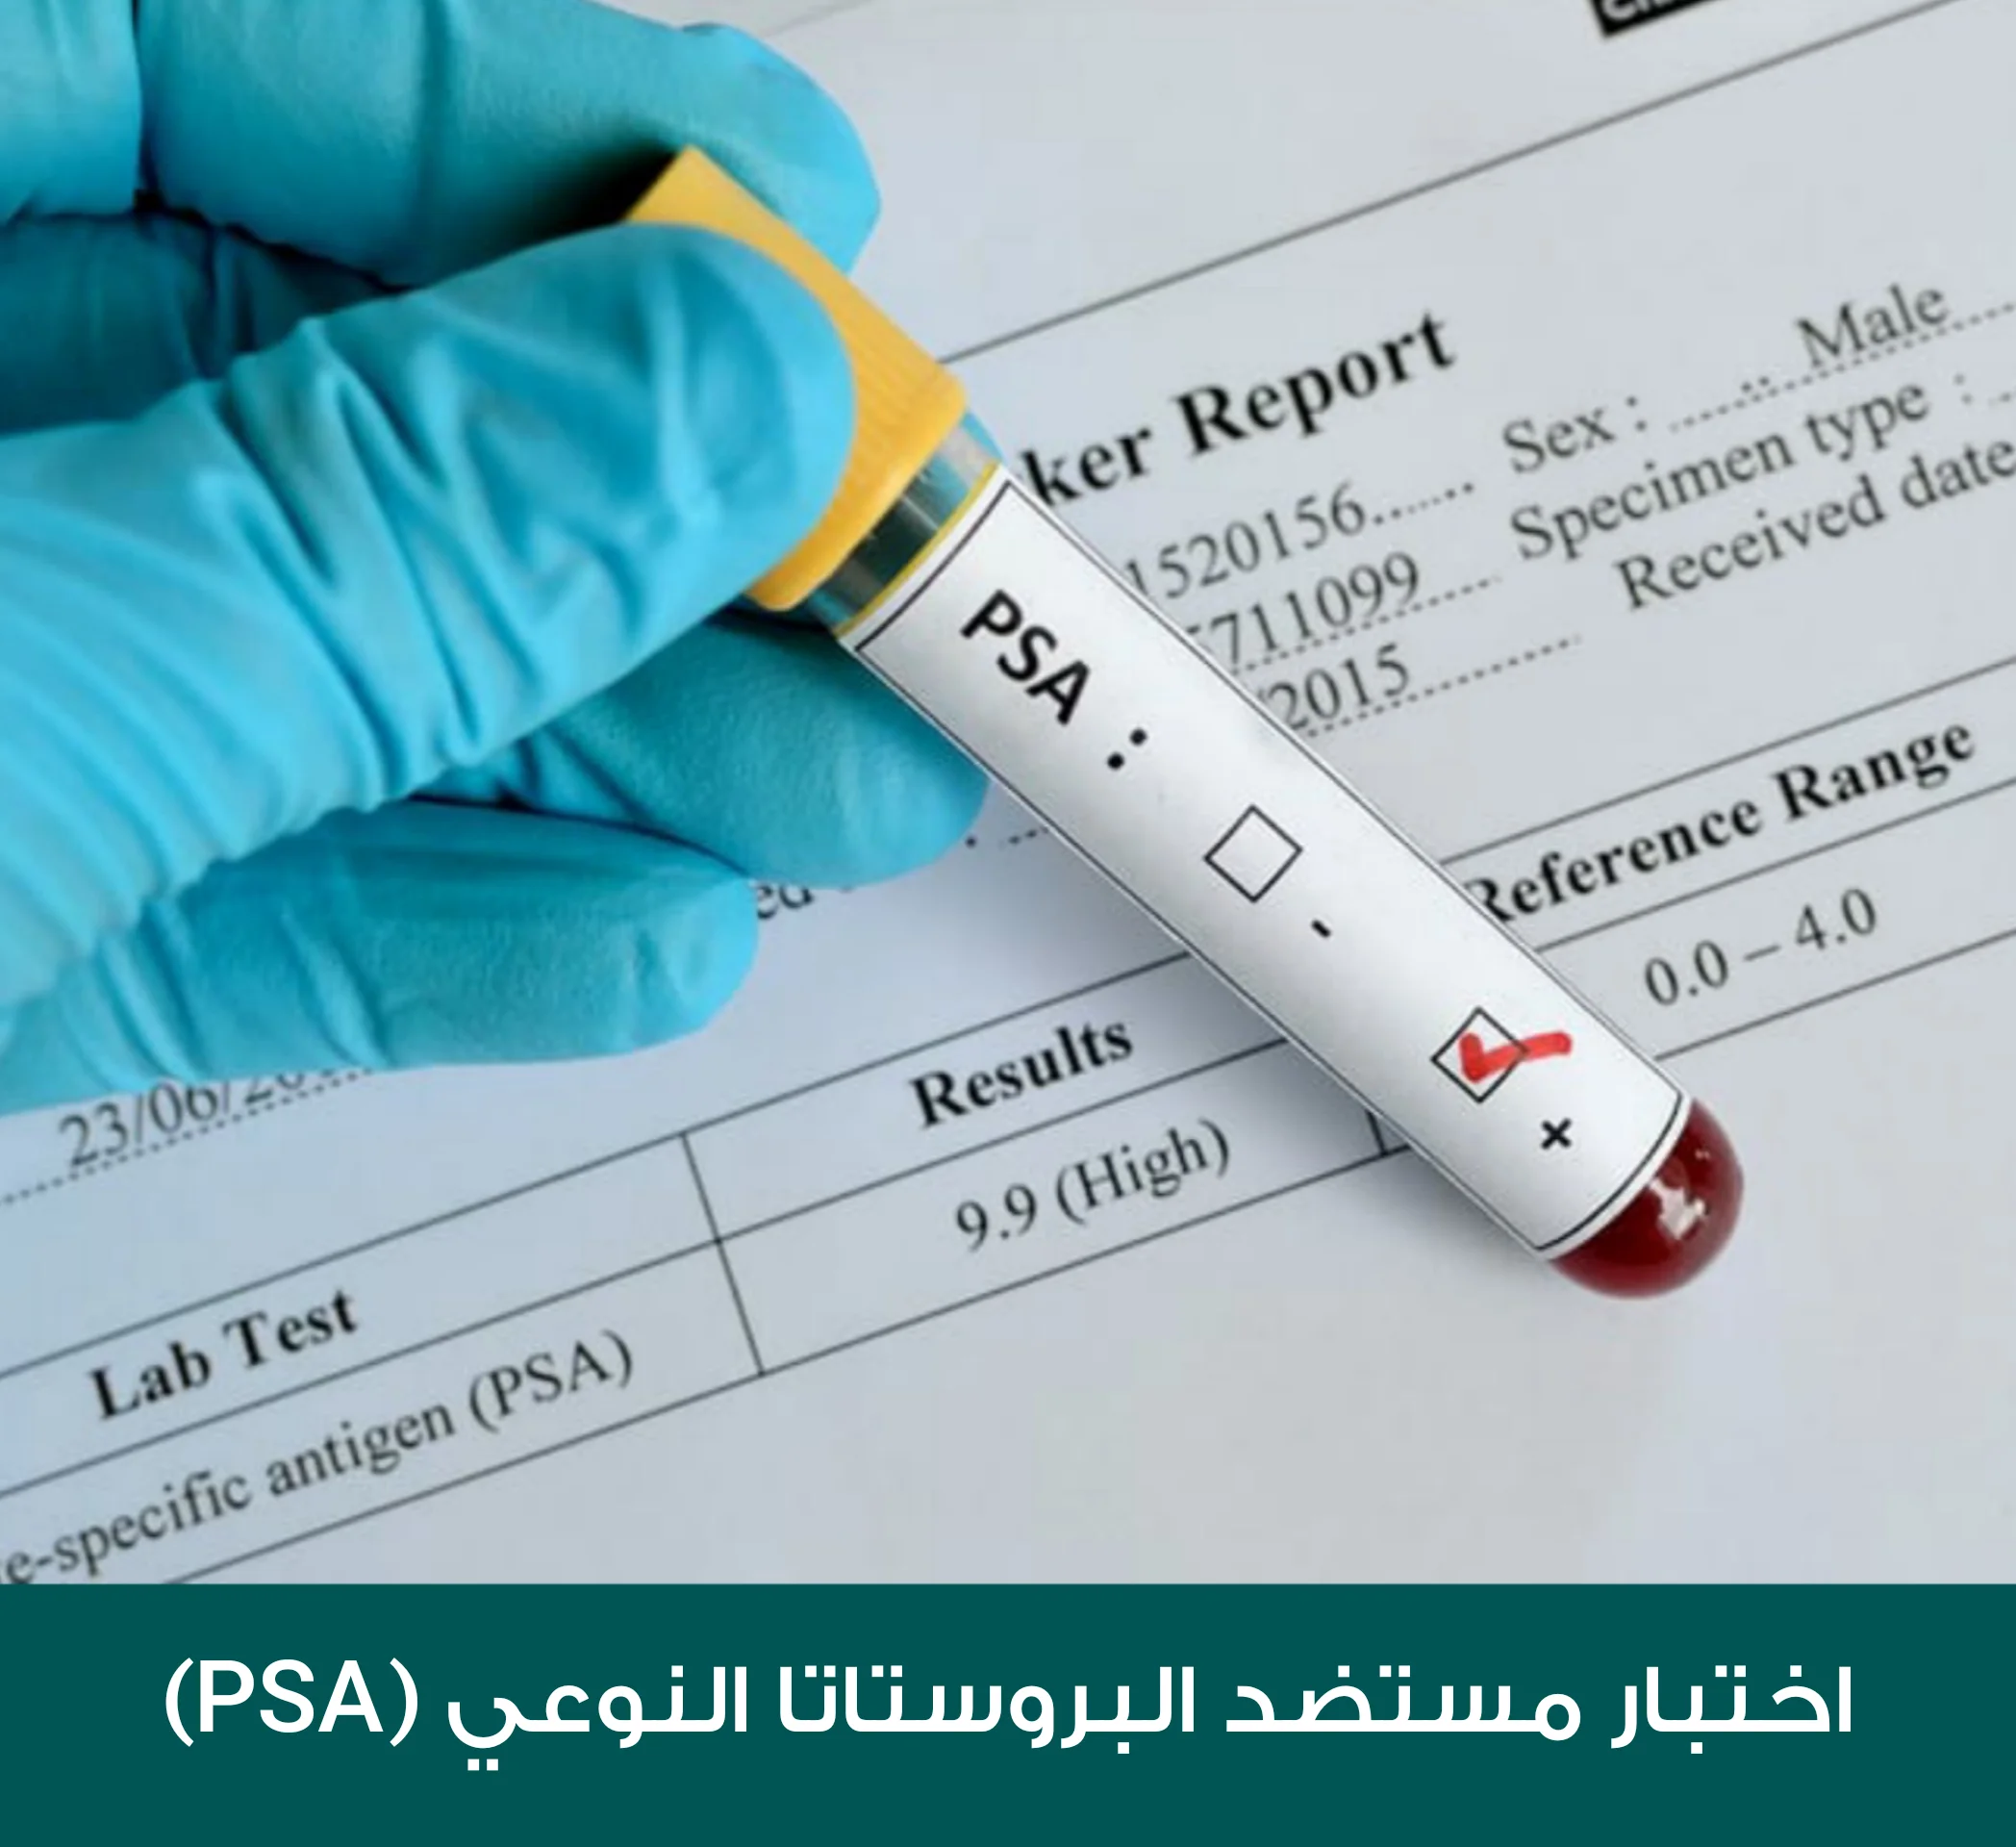 Prostate-specific antigen (PSA) test result